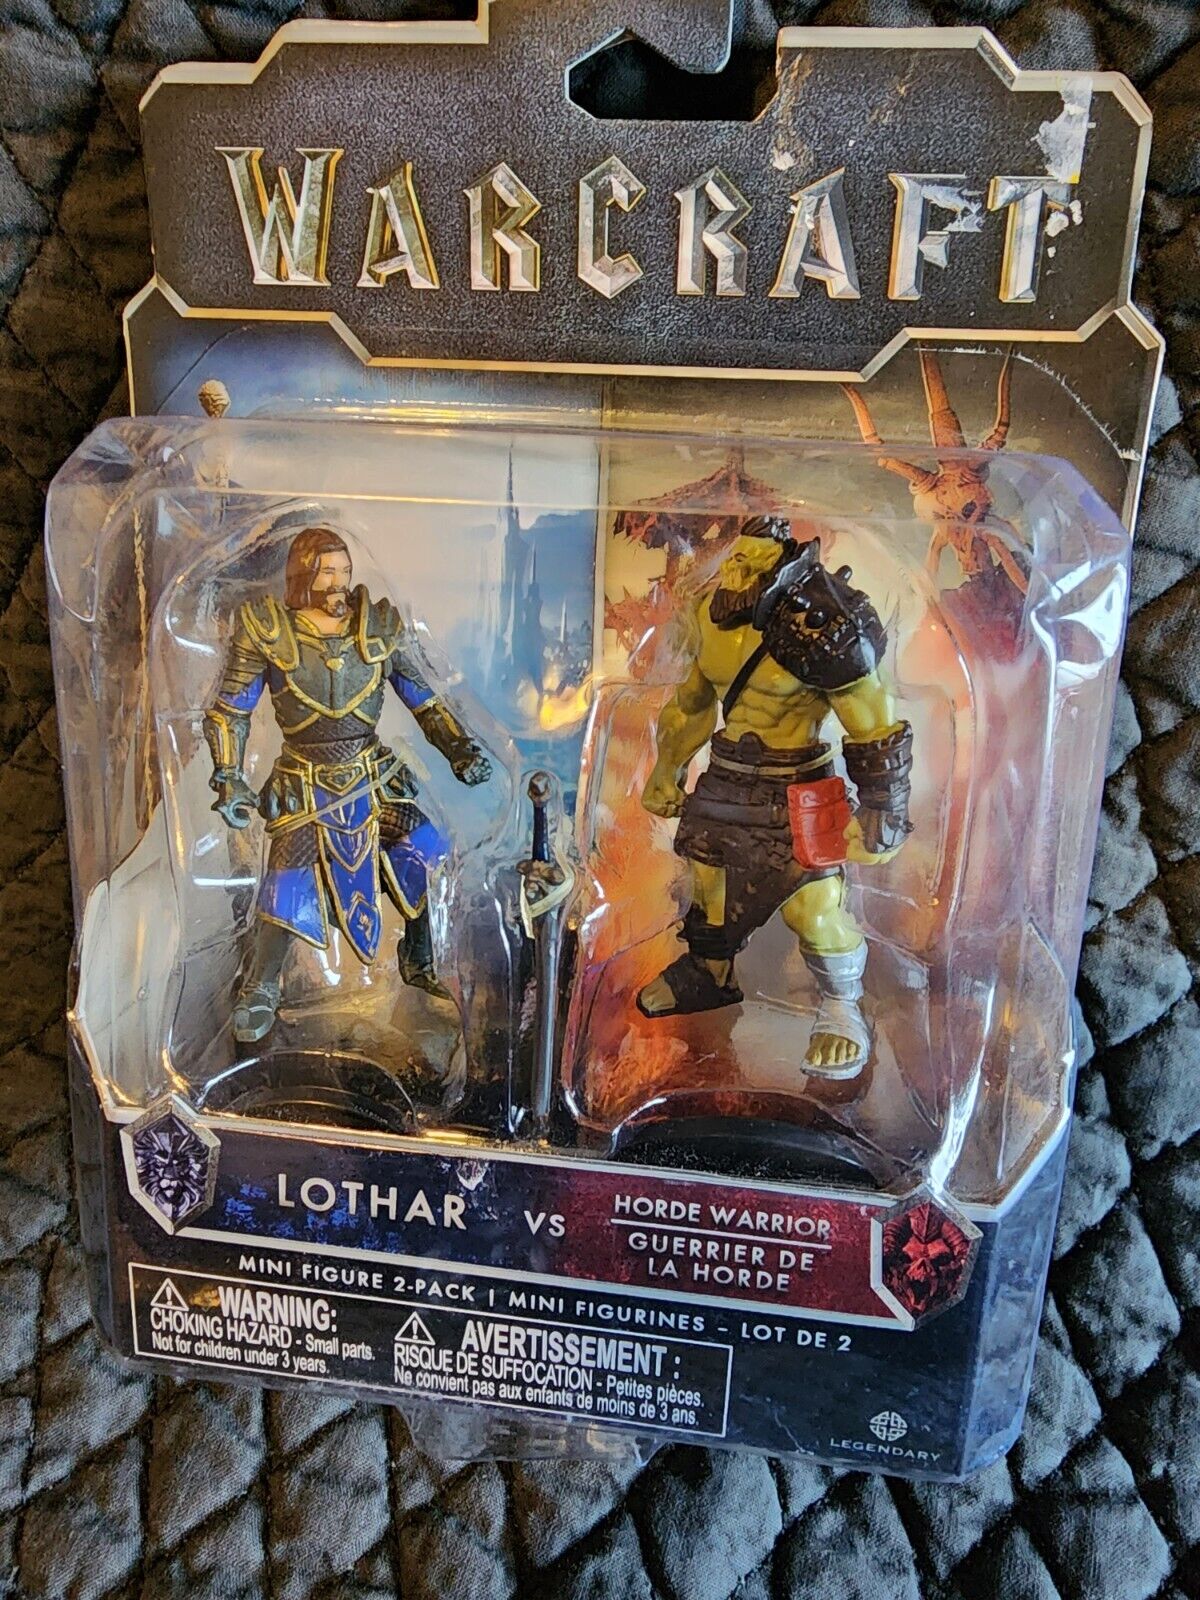 New NOS World of Warcraft Lothar vs Horde Warrior Mini Figure 2-Pack movie